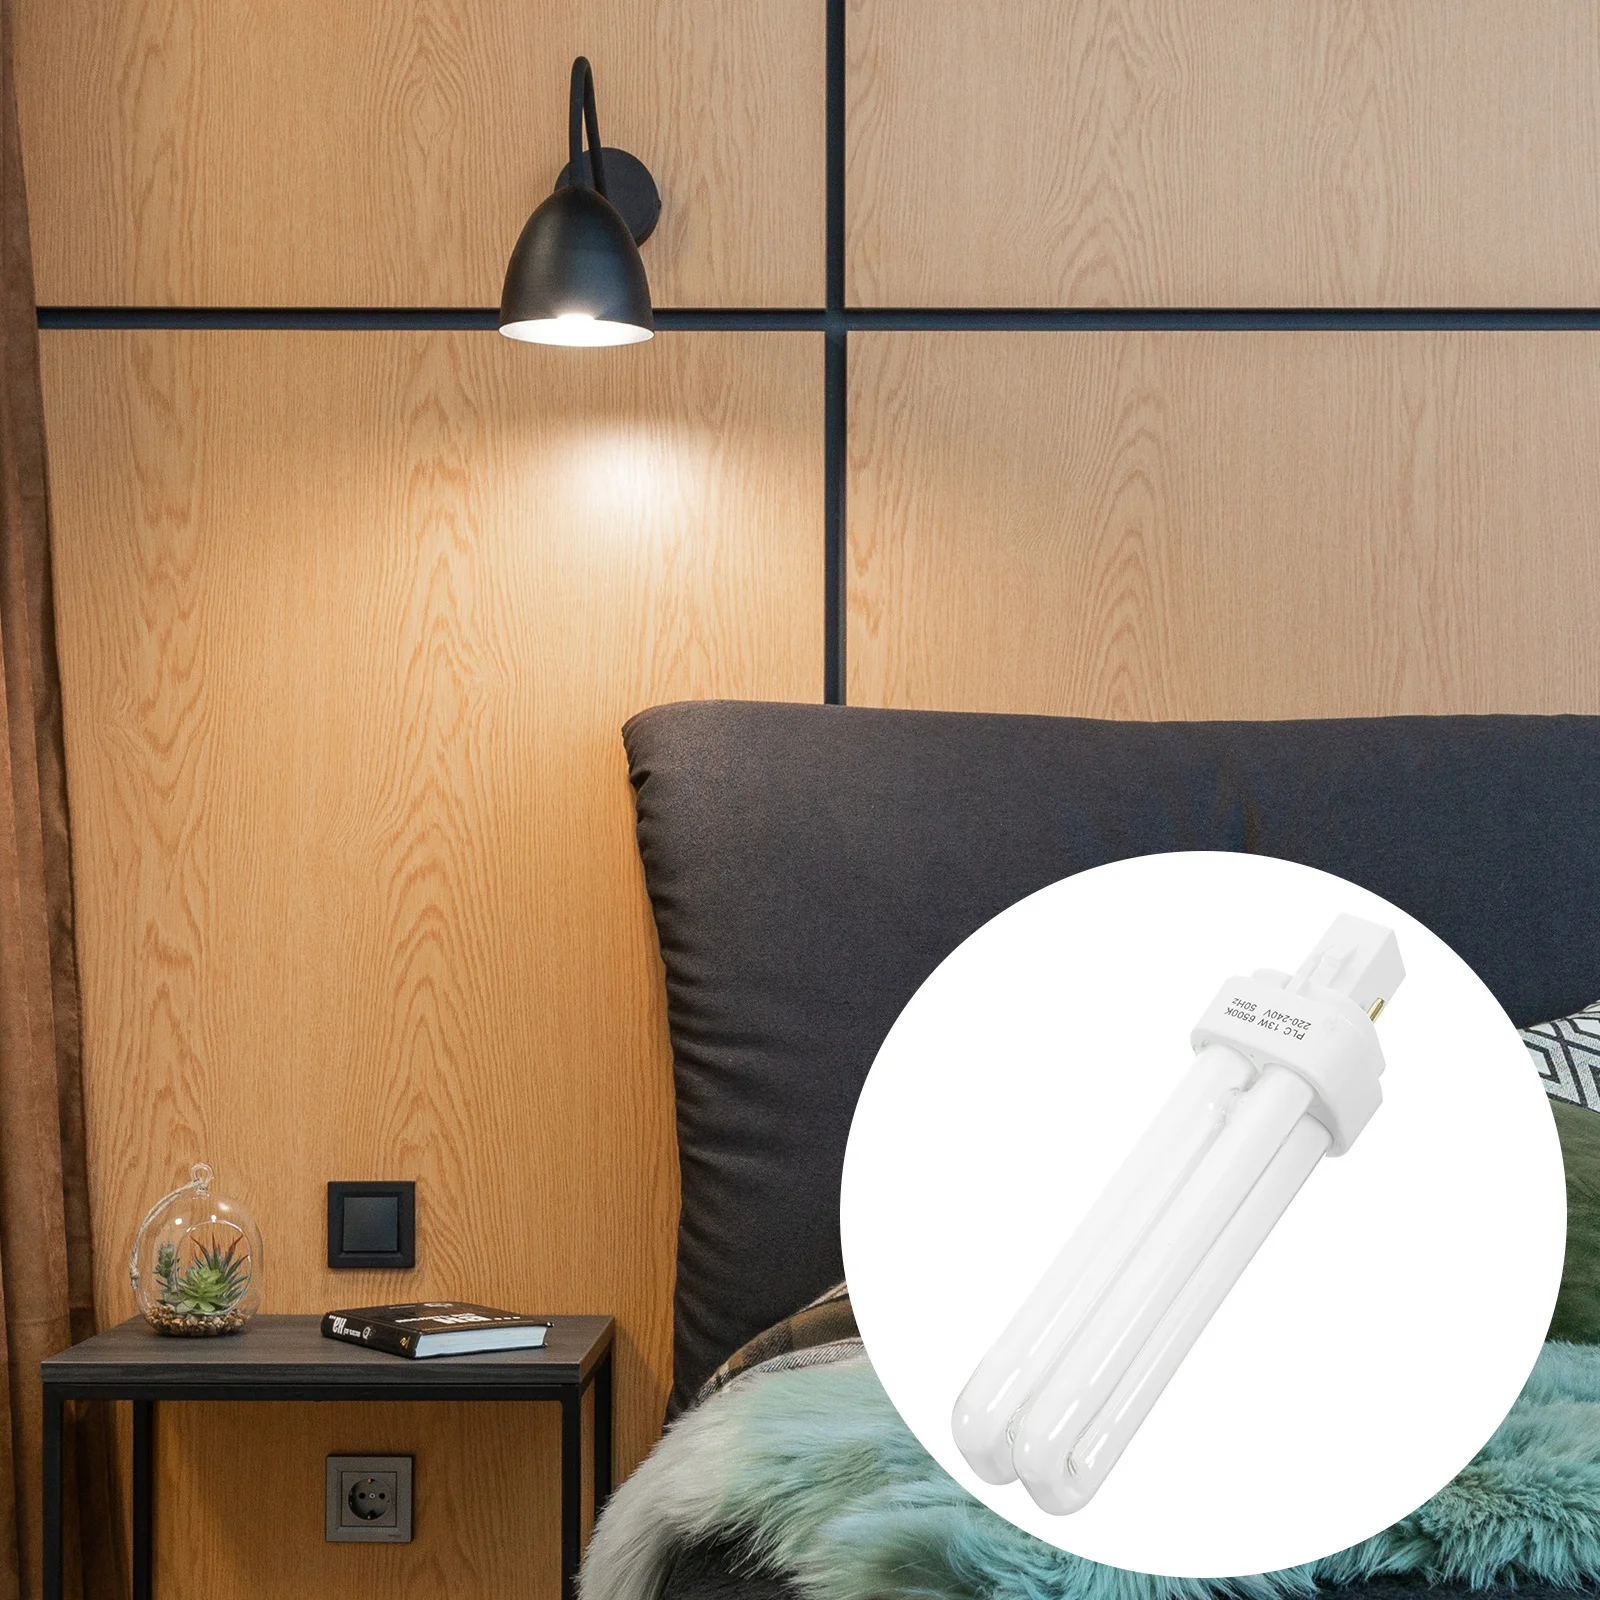 

4 Pcs Energy Saving Lamp 2 Pin Bathroom Light Bulbs Double Tube Fluorescent Replacement 13W